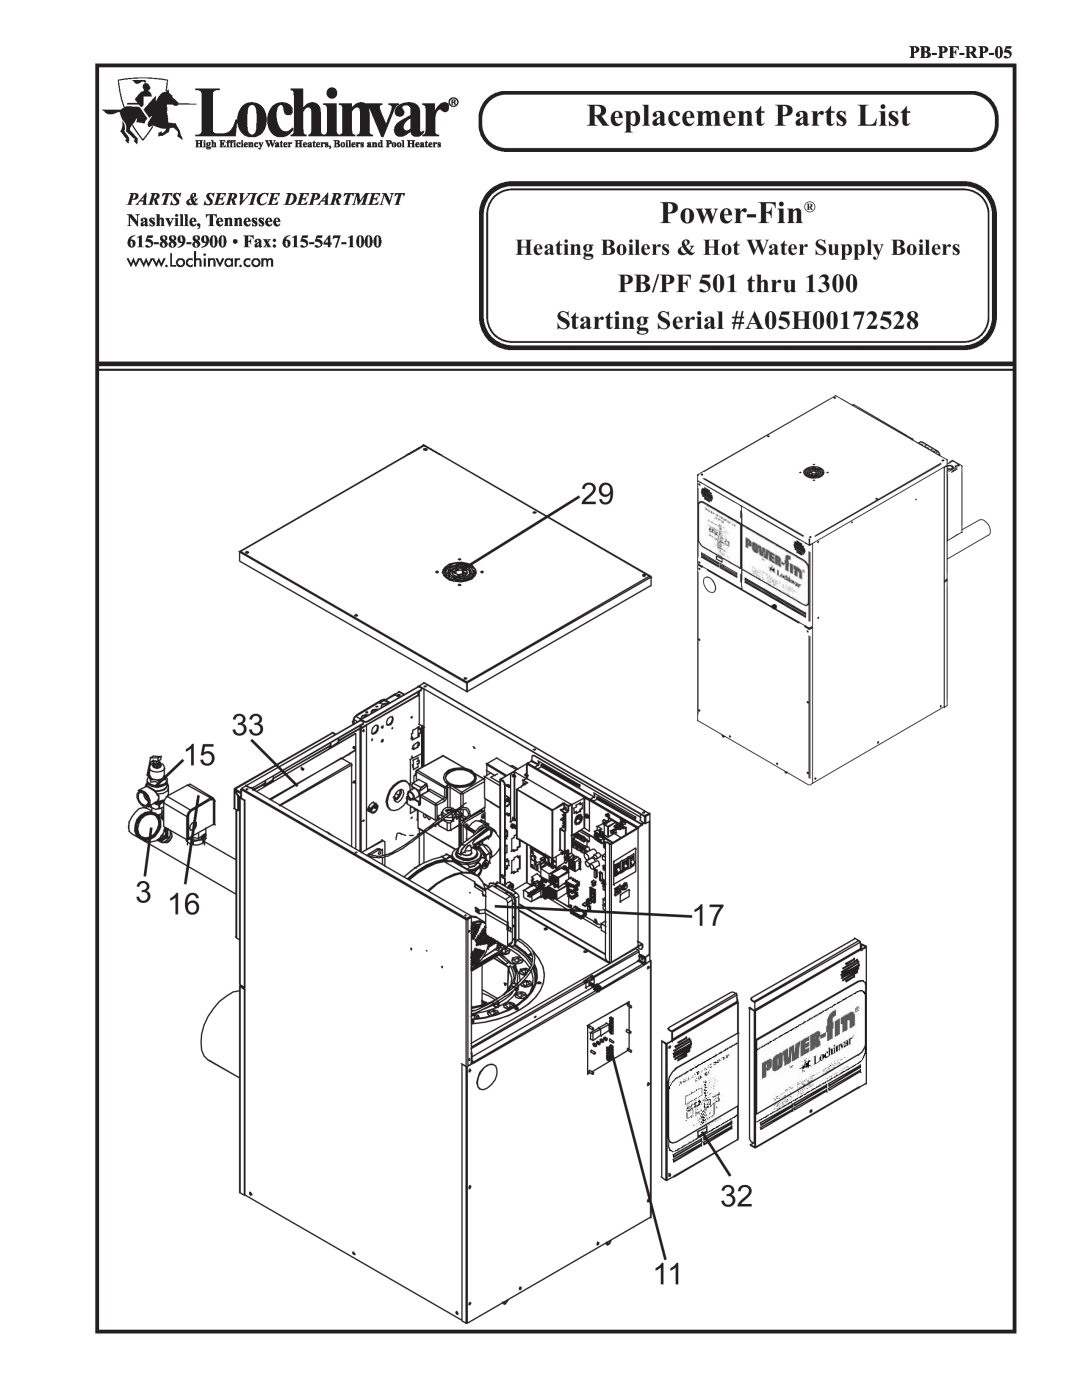 Lochinvar manual Replacement Parts List, Power-Fin, PB/PF 501 thru Starting Serial #A05H00172528, PB-PF-RP-05 